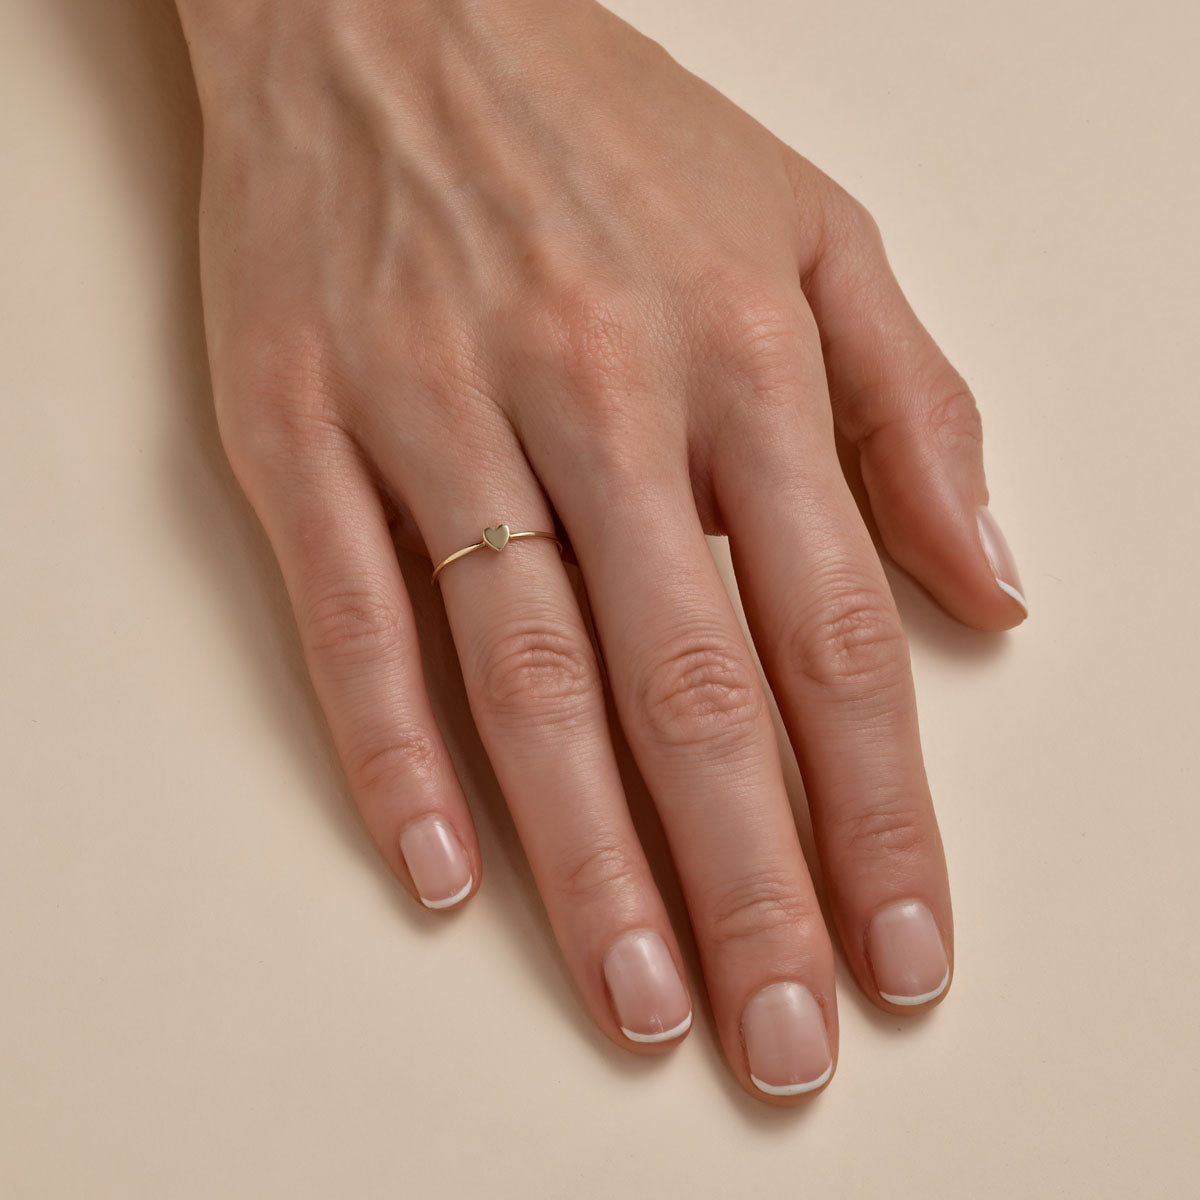 tiny diamond heart ring on womans finger